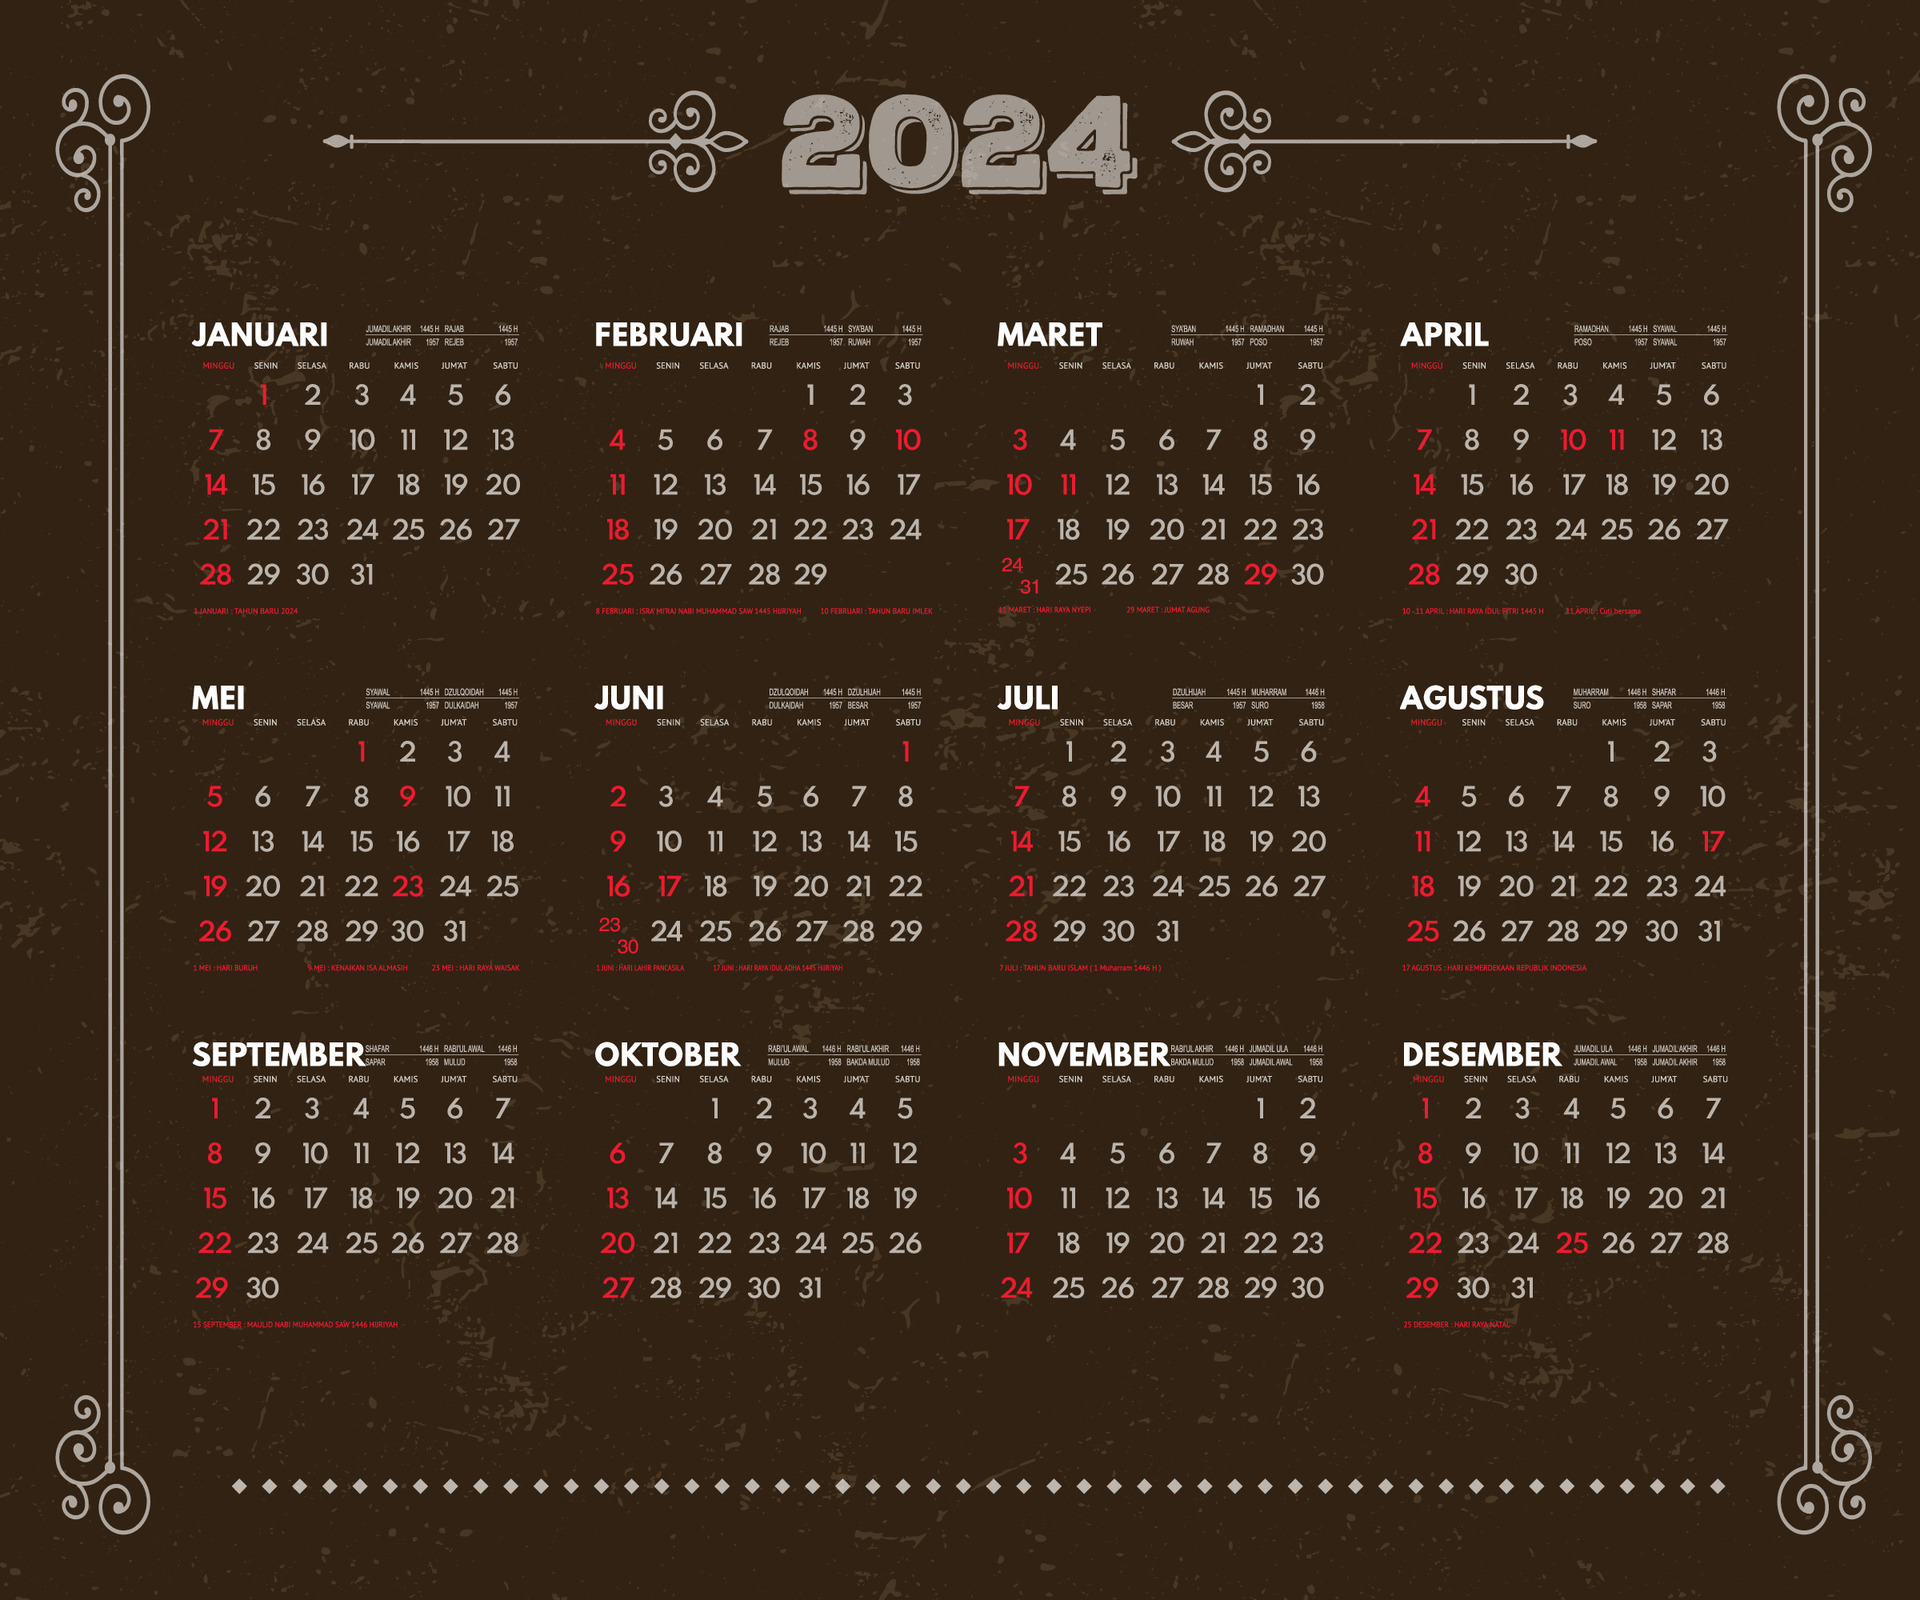 2024 calendar template, 2024 Indonesian calendar complete with national